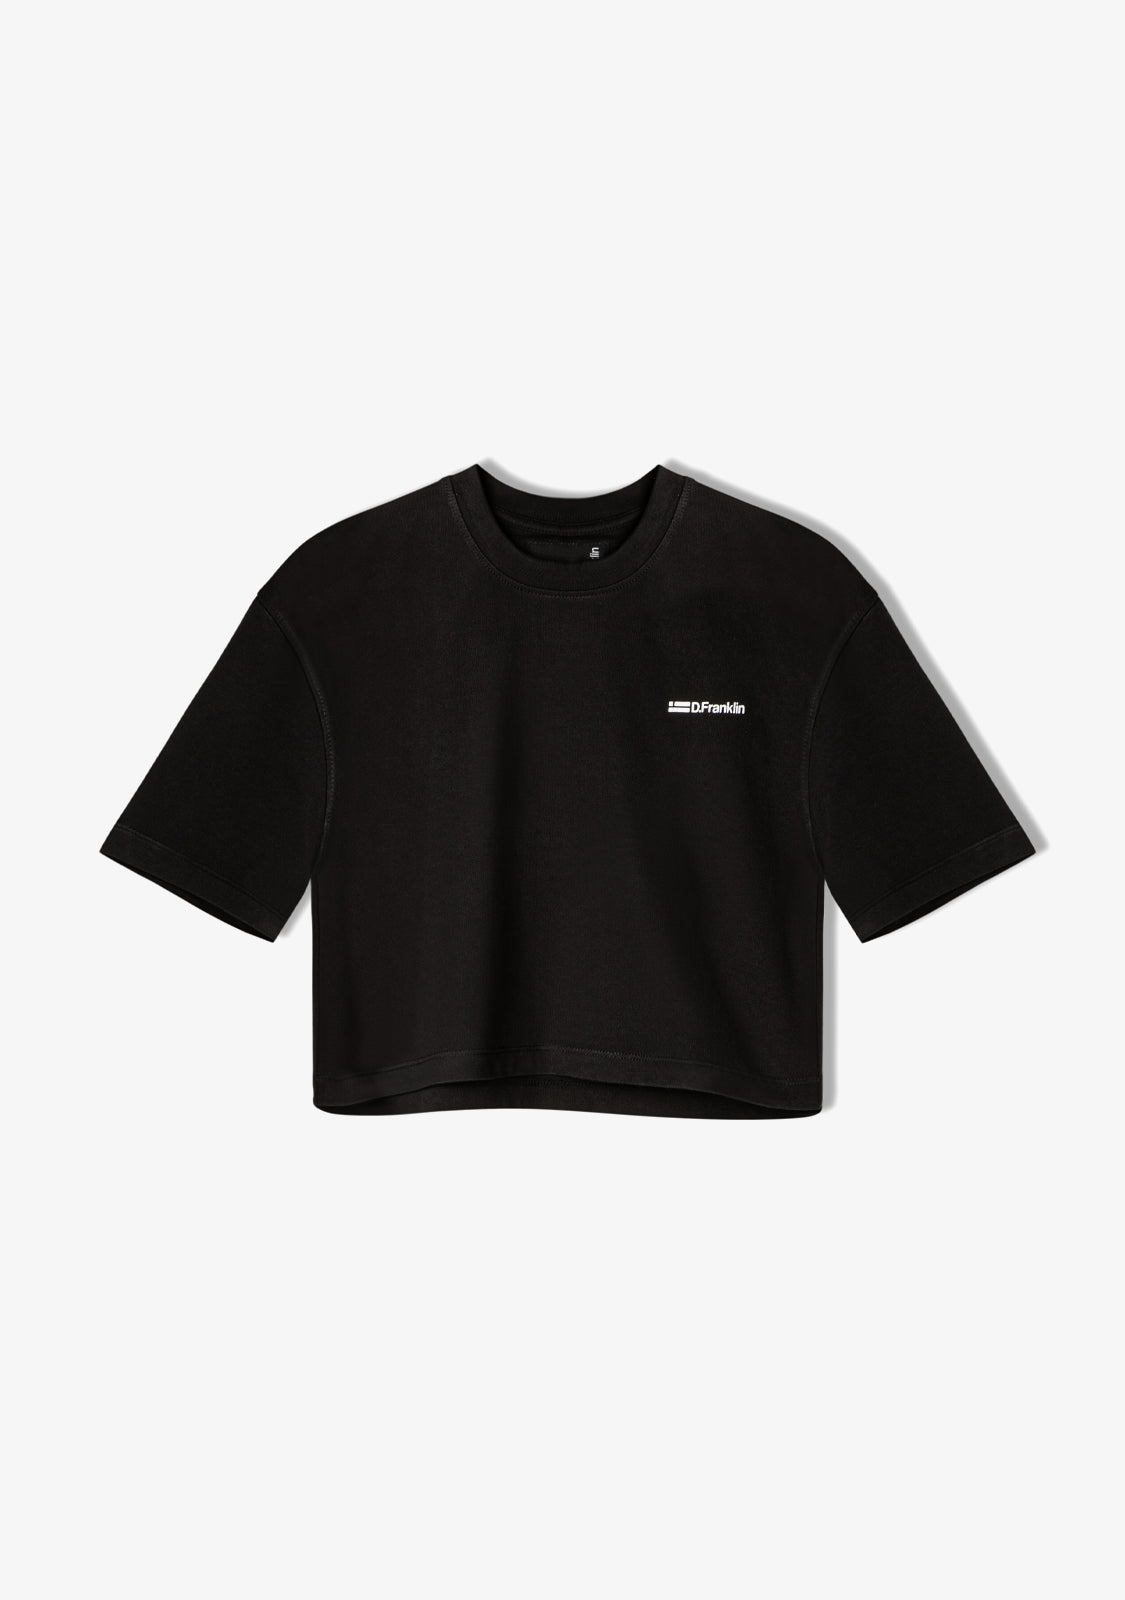 St. Denis Cropped T-Shirt Black / White